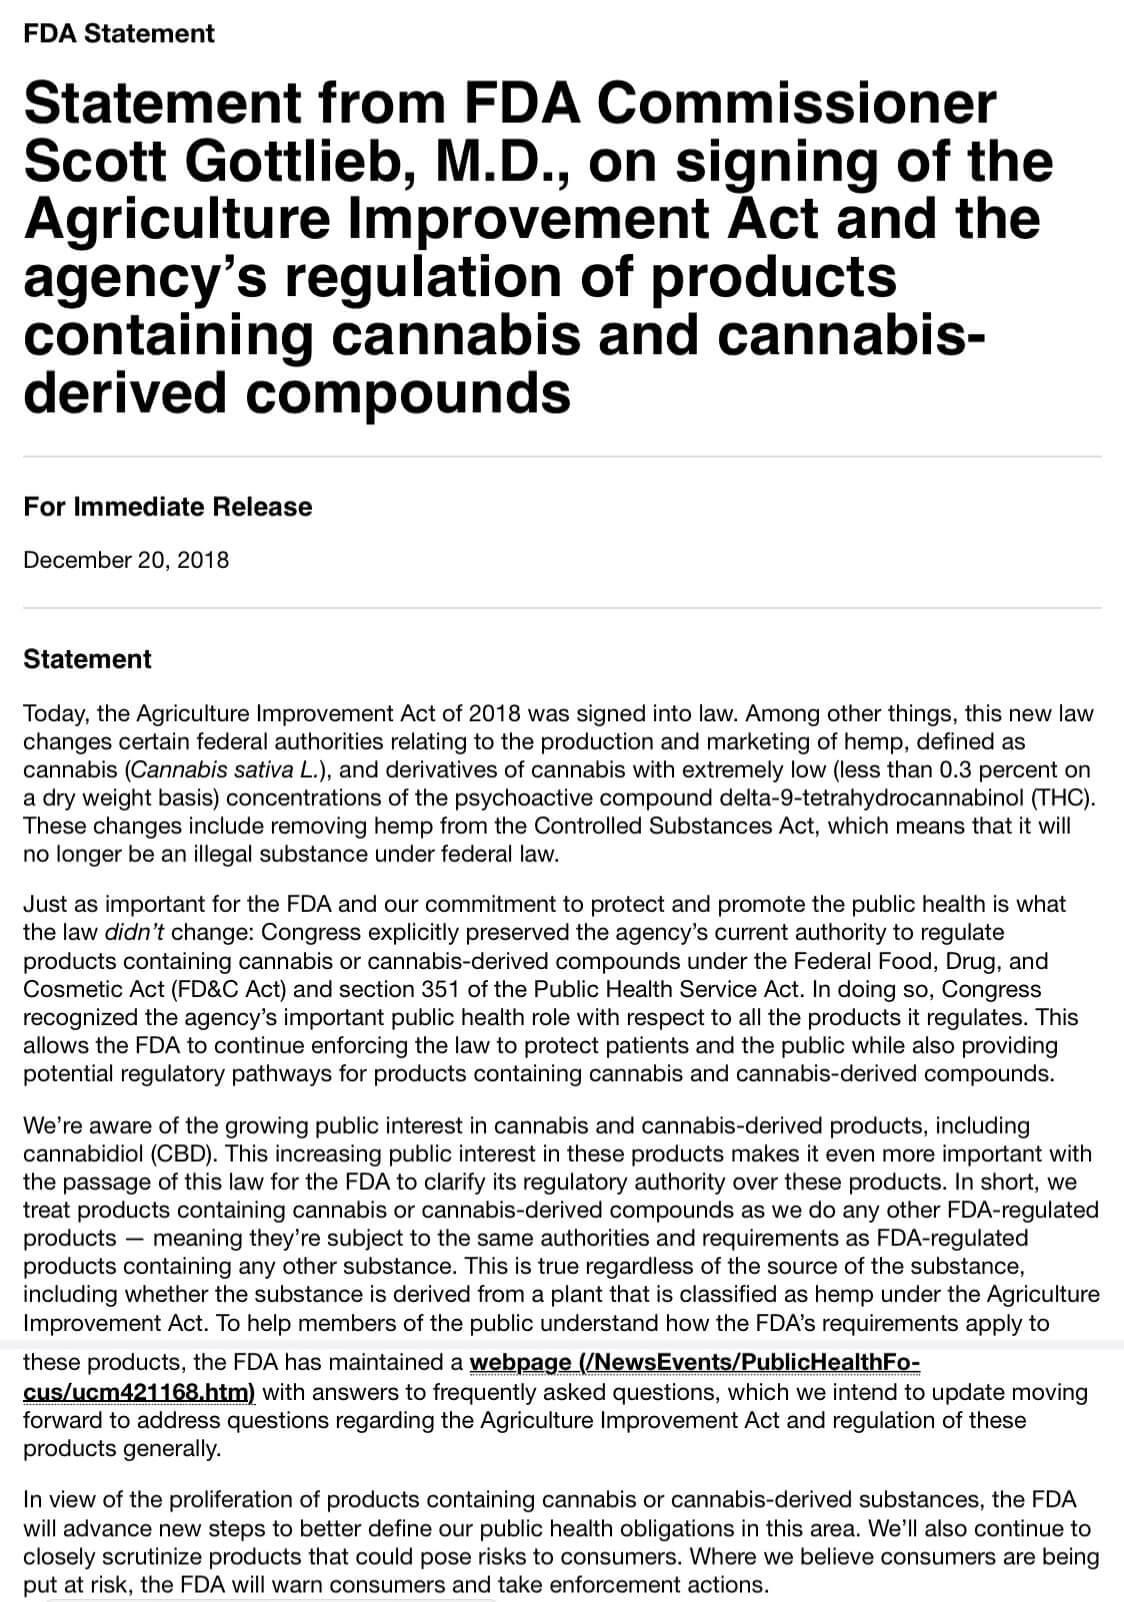 FDA and CBD Oil Regulations